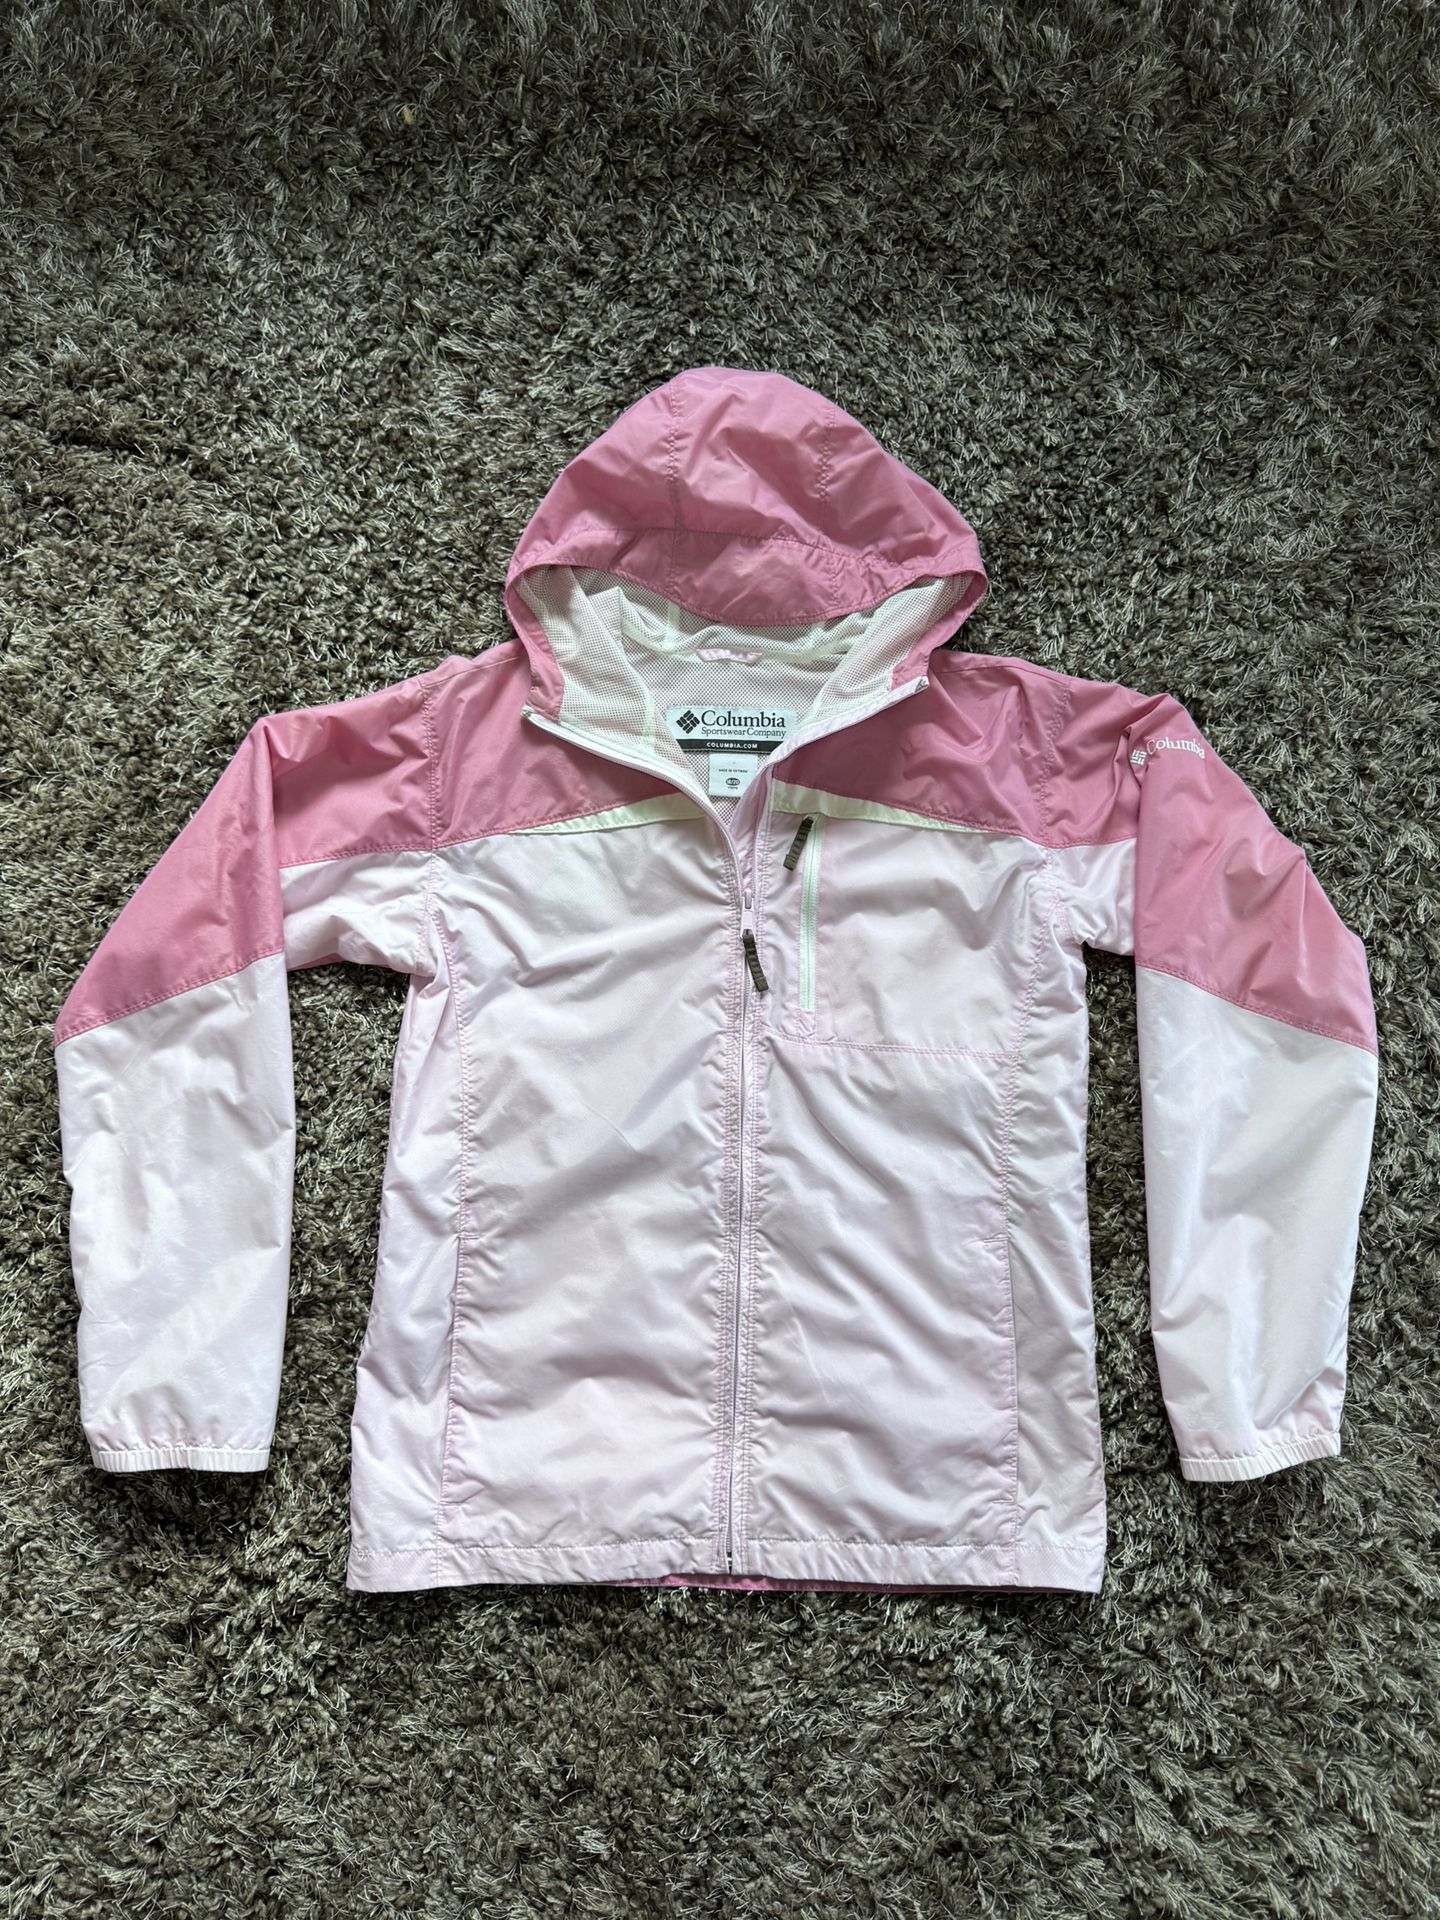 Columbia Titanium Omni Tech Waterproof Windbreaker Jacket Youth XL 18/20 Pink